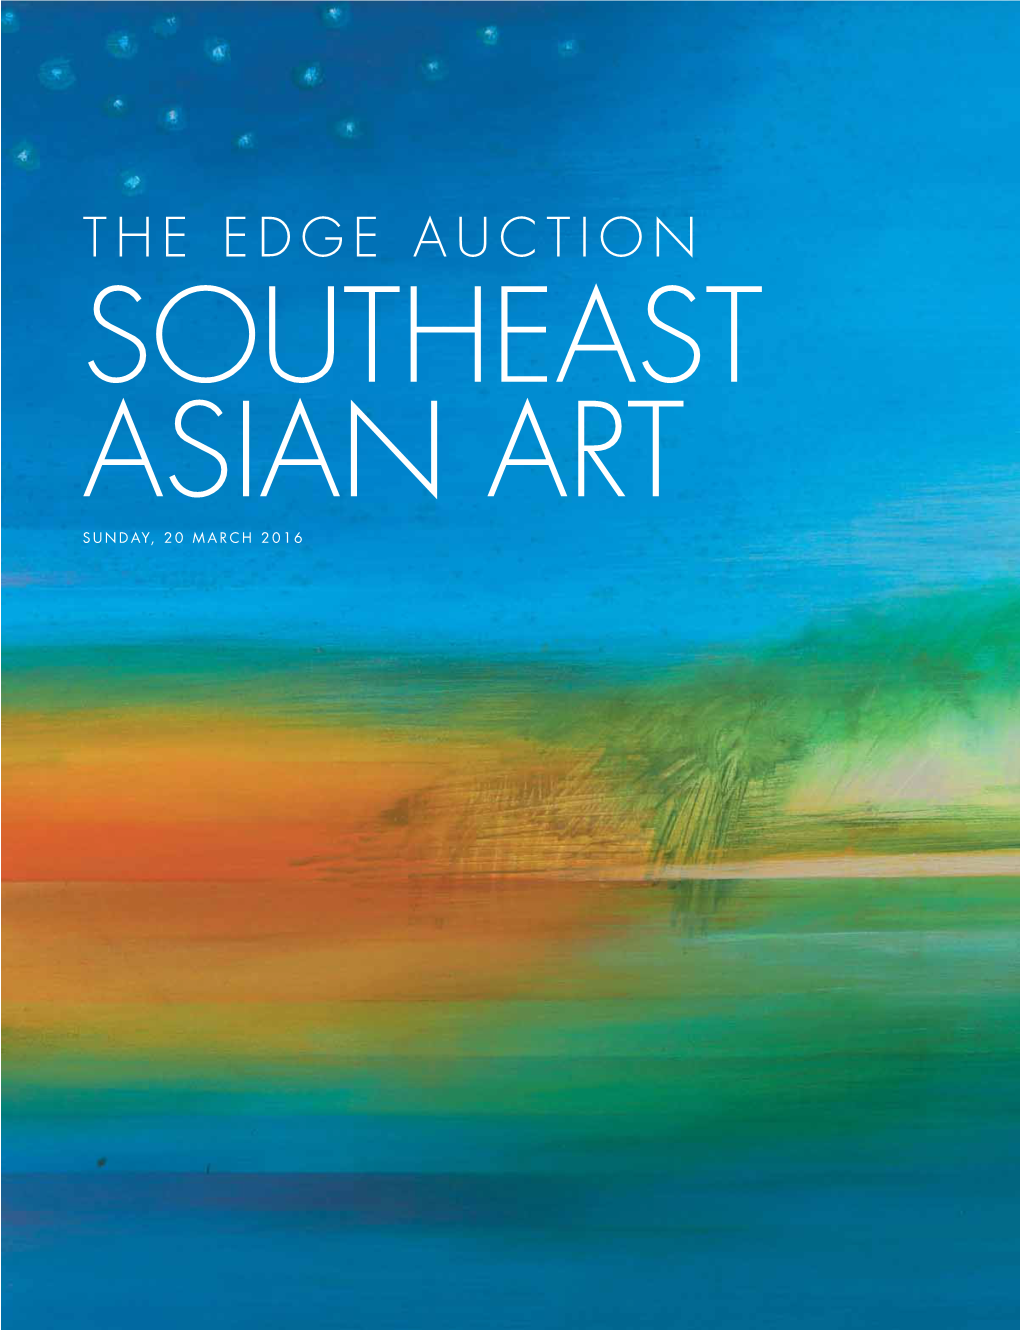 The Edge Auction Southeast Asian Art